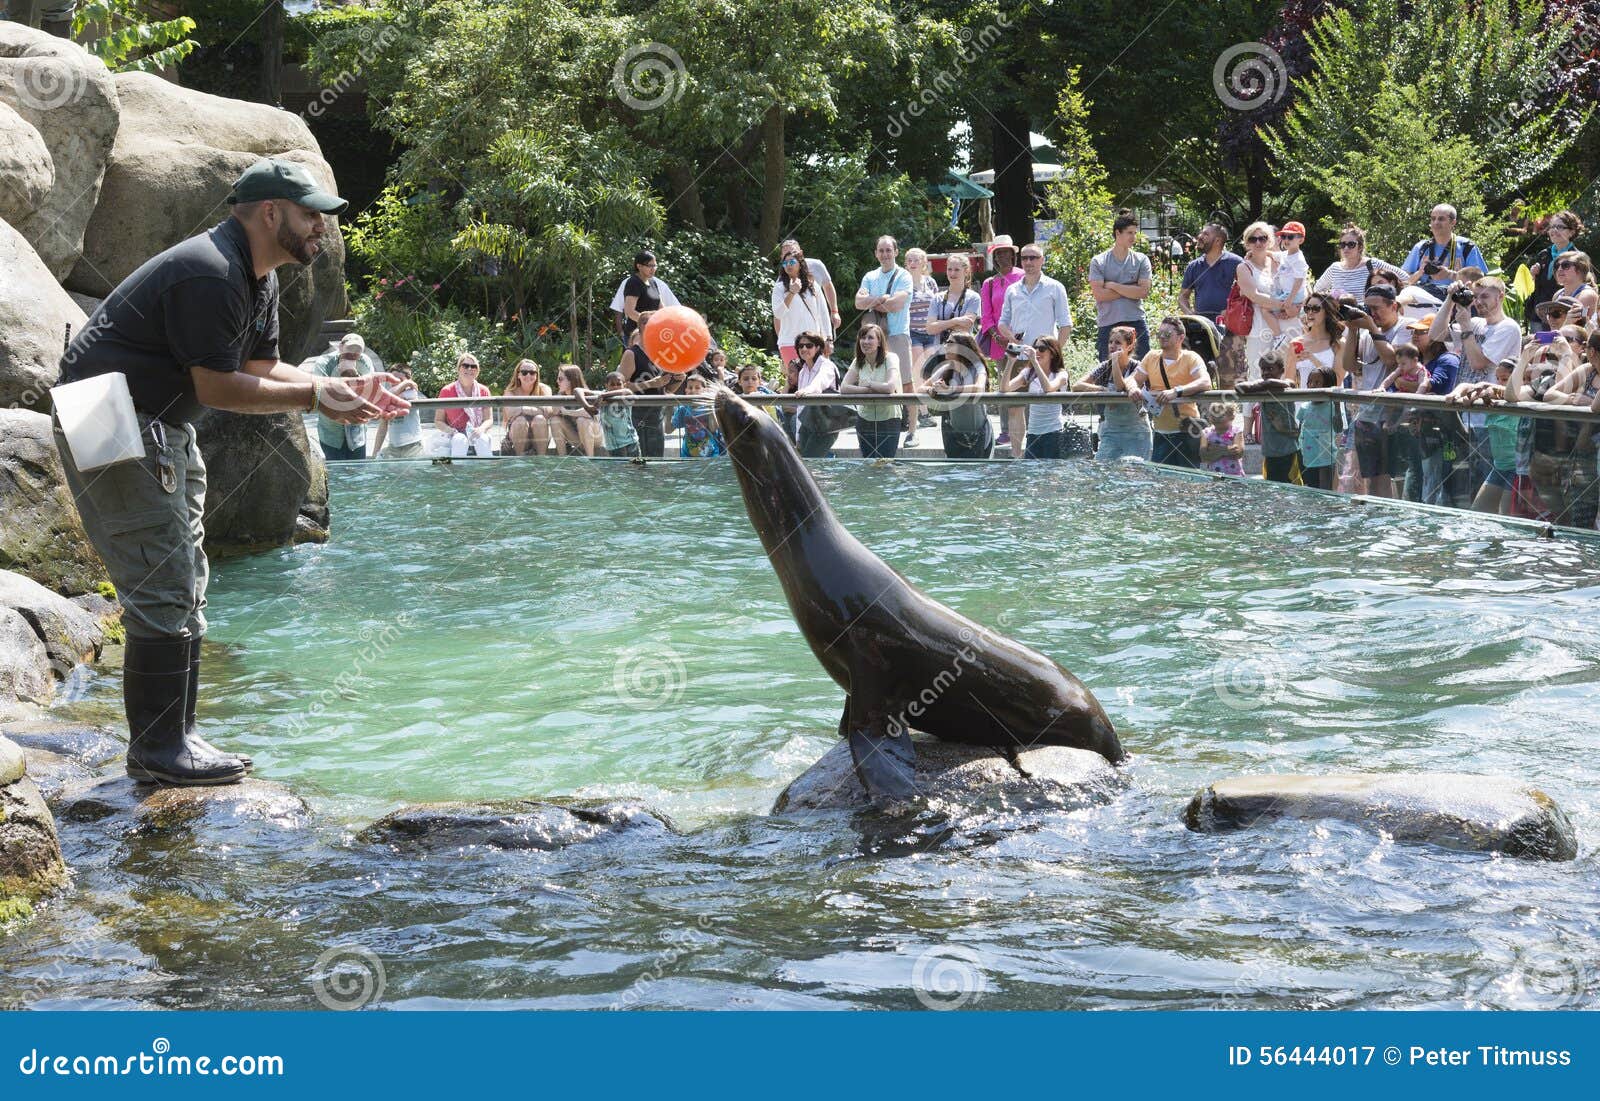 Sea Lion Balancing a Ball Central Park Zoo NYC Editorial Photography ...